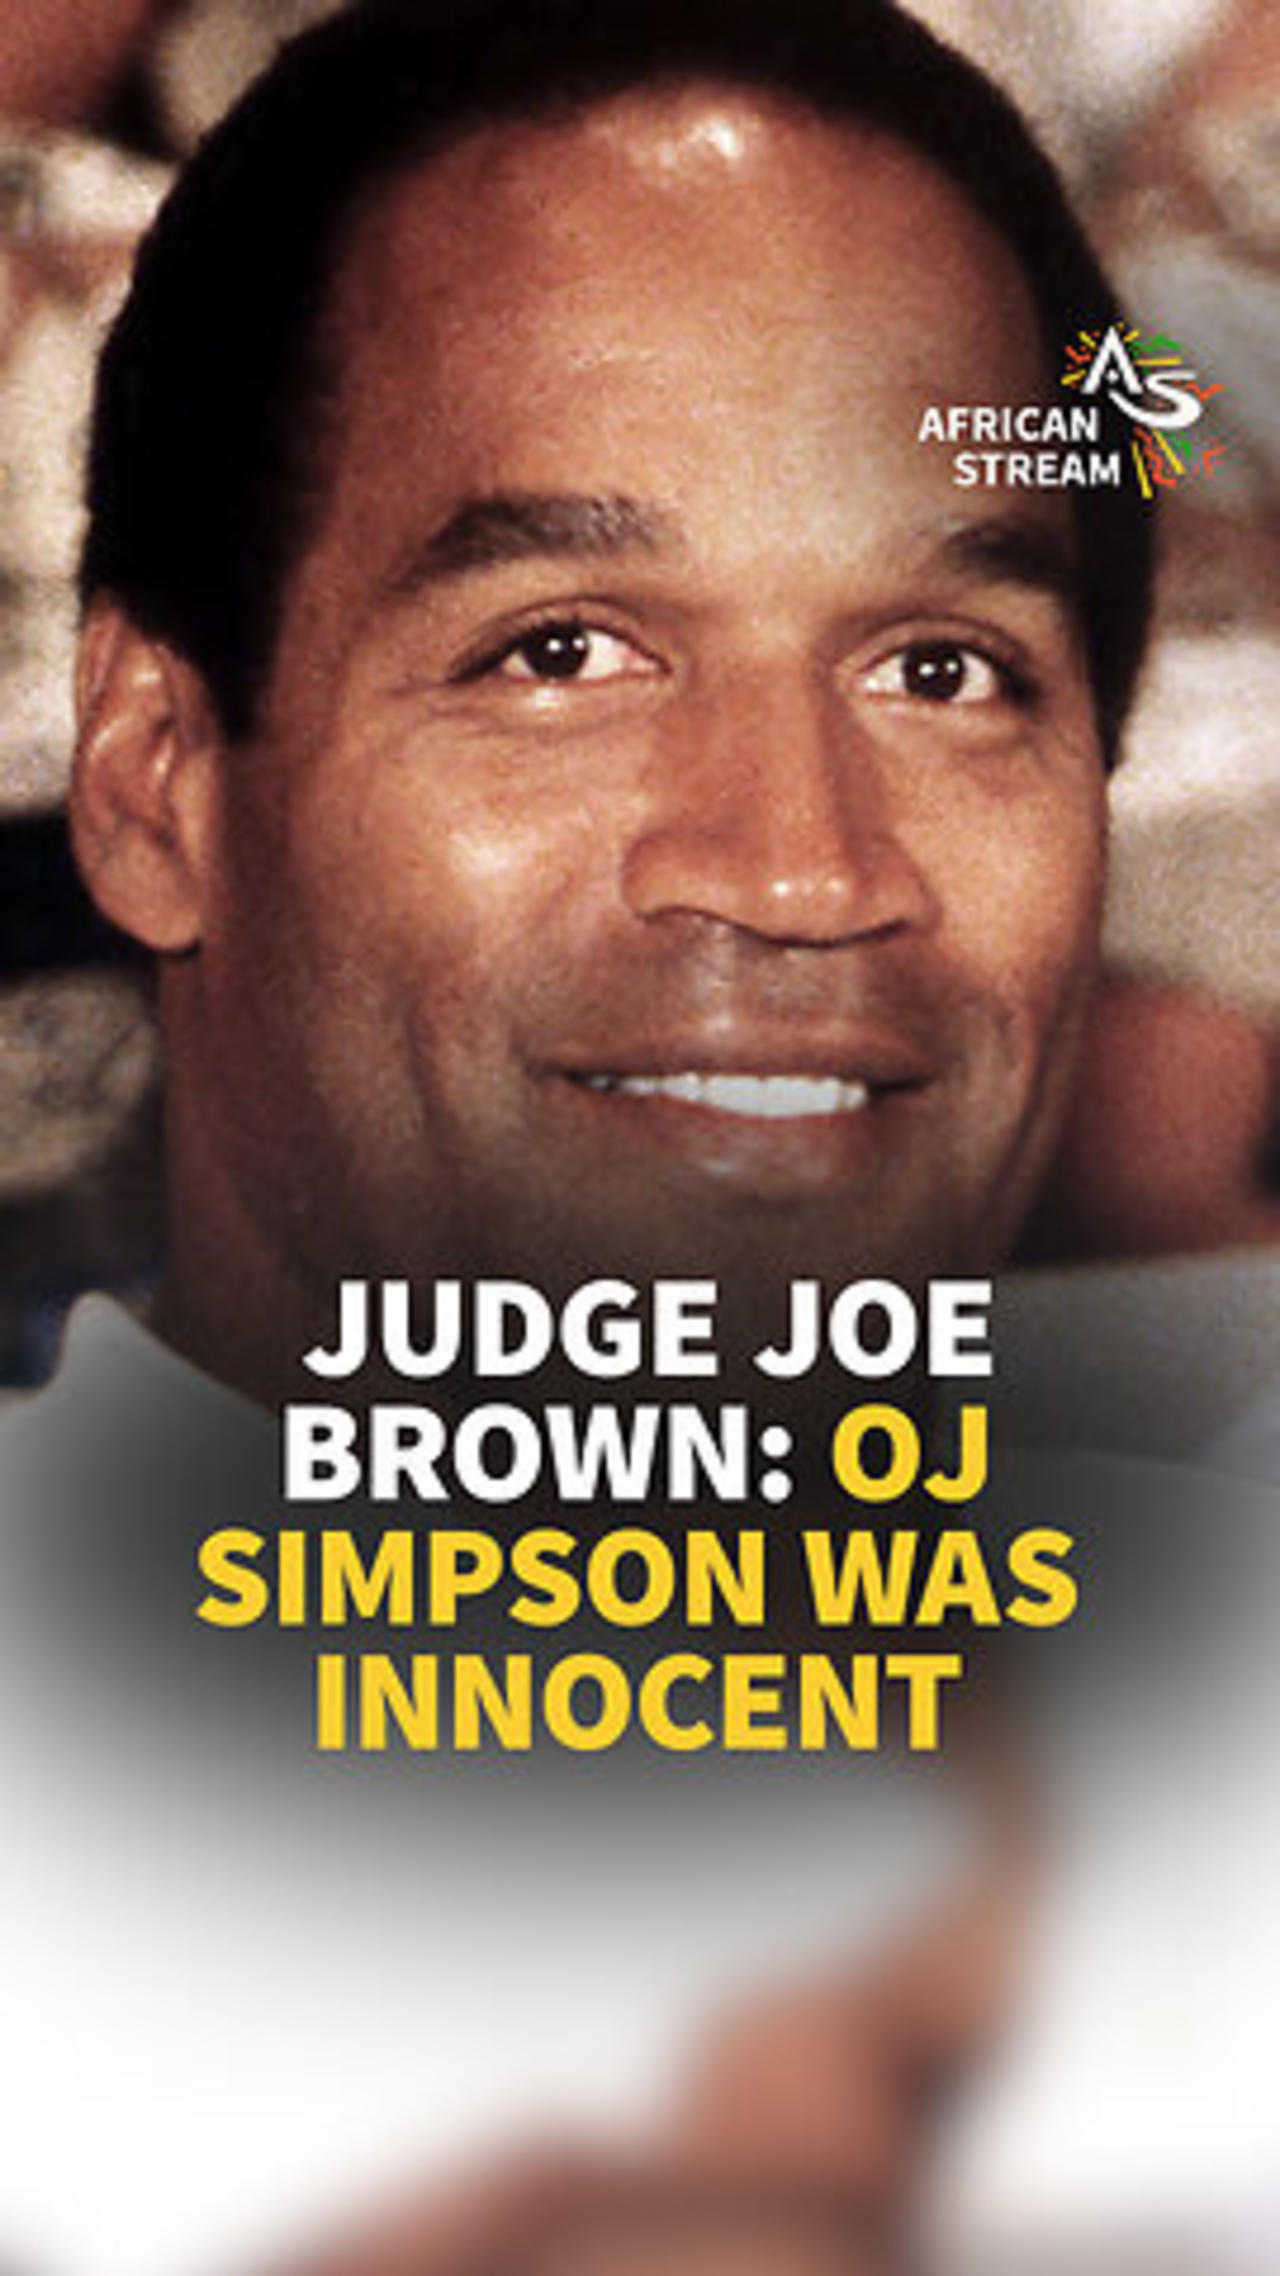 JUDGE JOE BROWN: OJ SIMPSON WAS INNOCENT